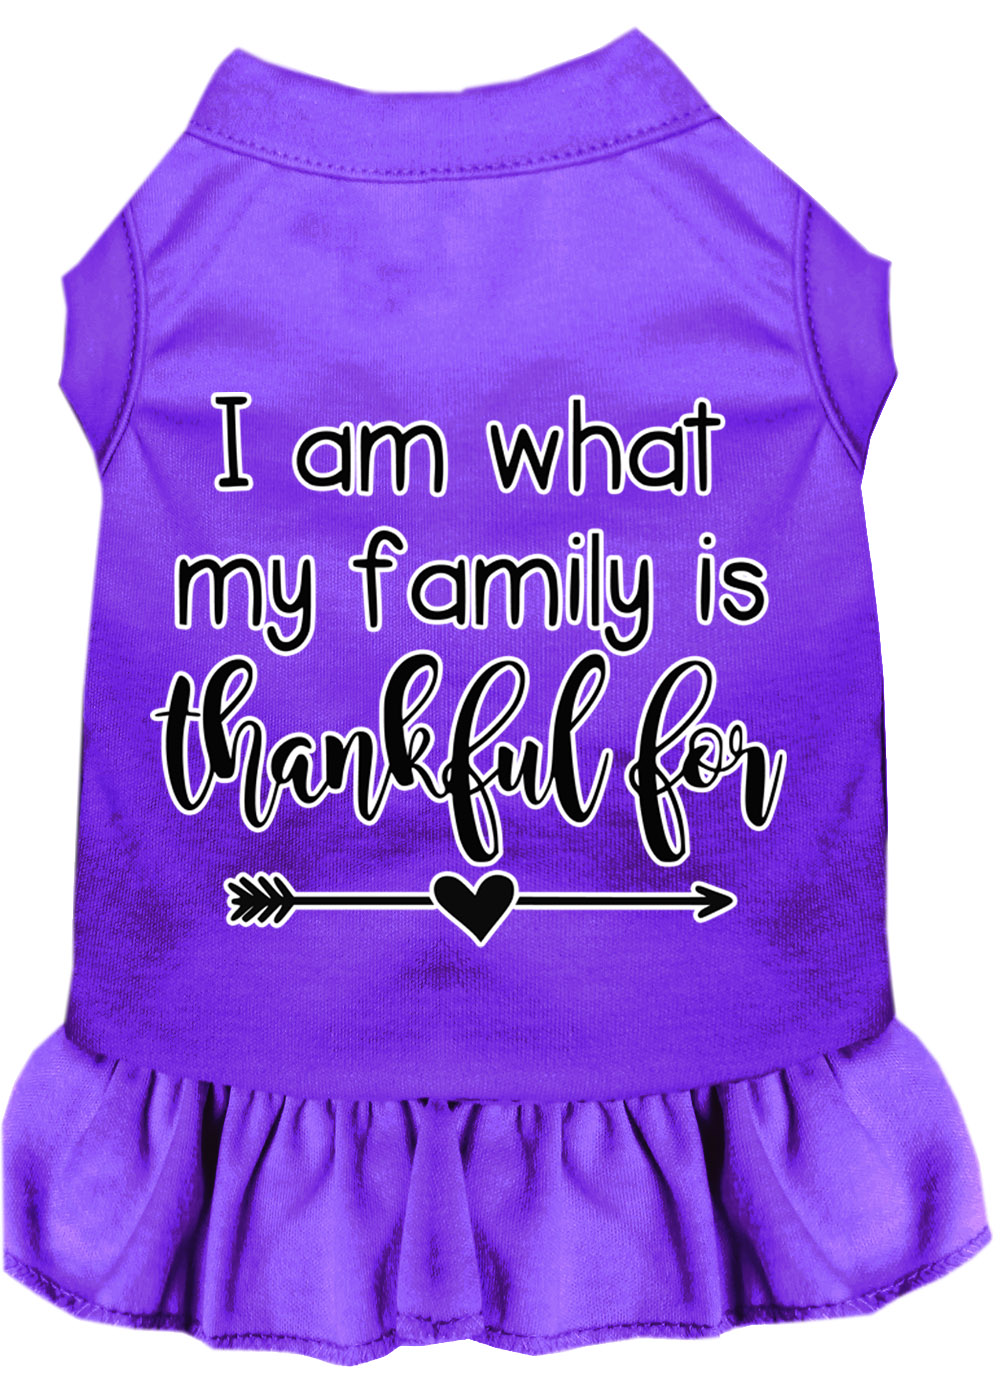 I Am What My Family is Thankful For Screen Print Dog Dress Purple XXXL